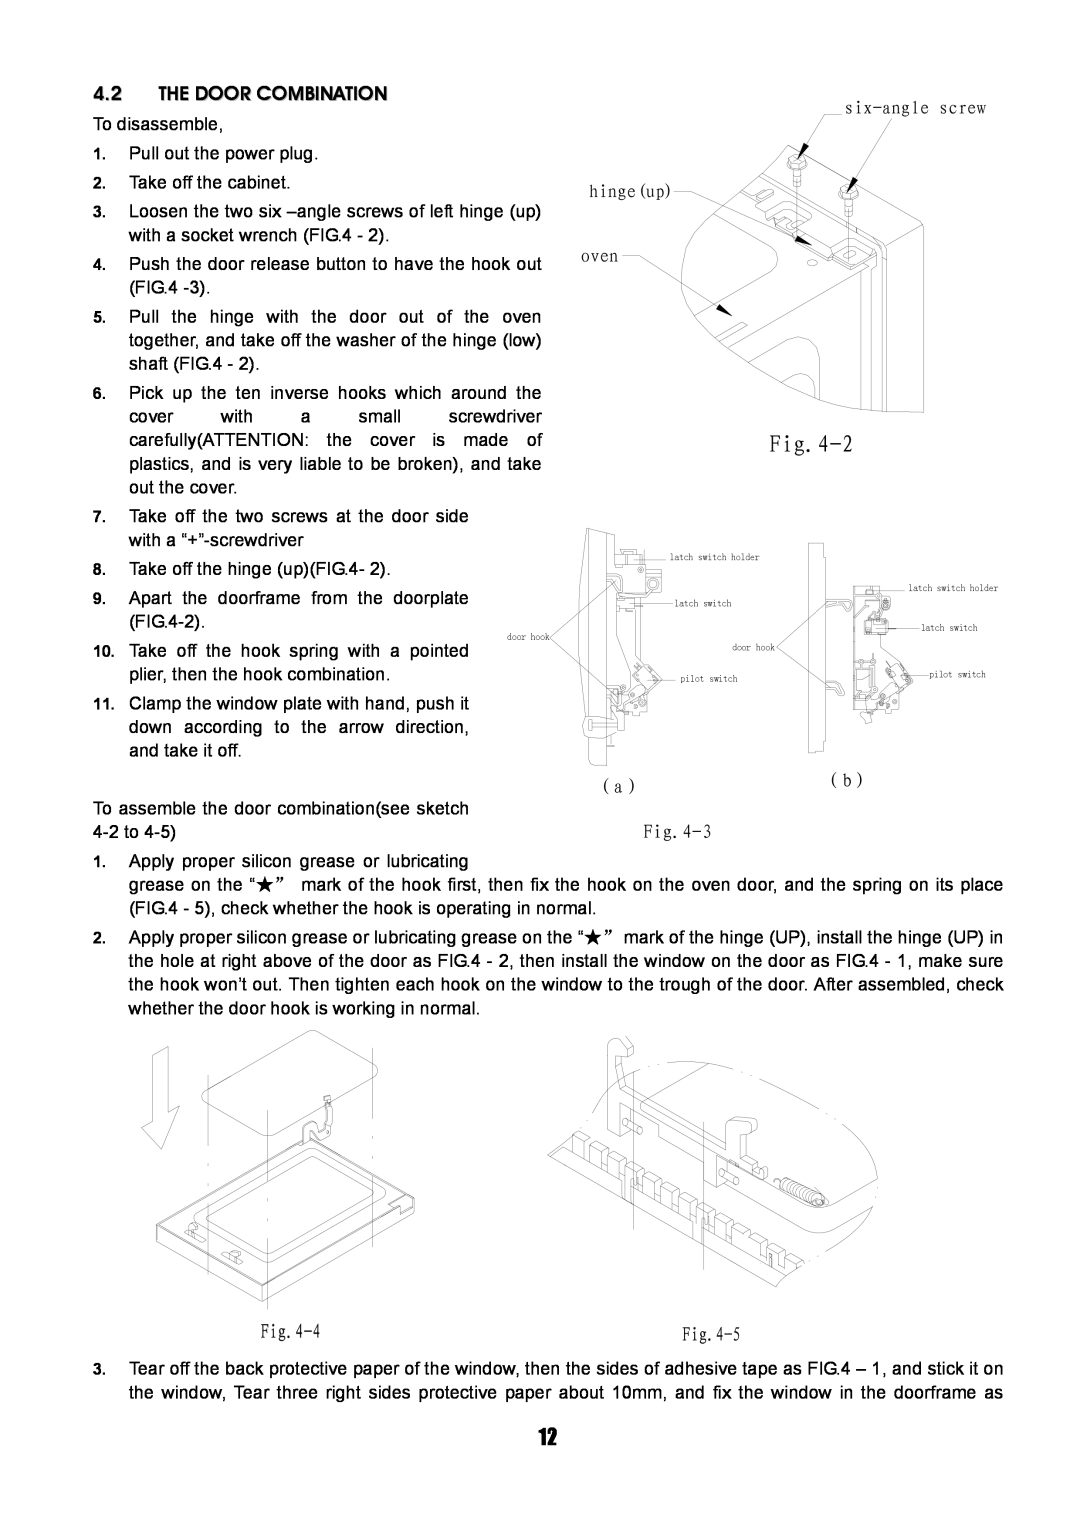 Sanyo SM-GA0005 service manual 4.2THE DOOR COMBINATION, six-anglescrew hingeup oven 